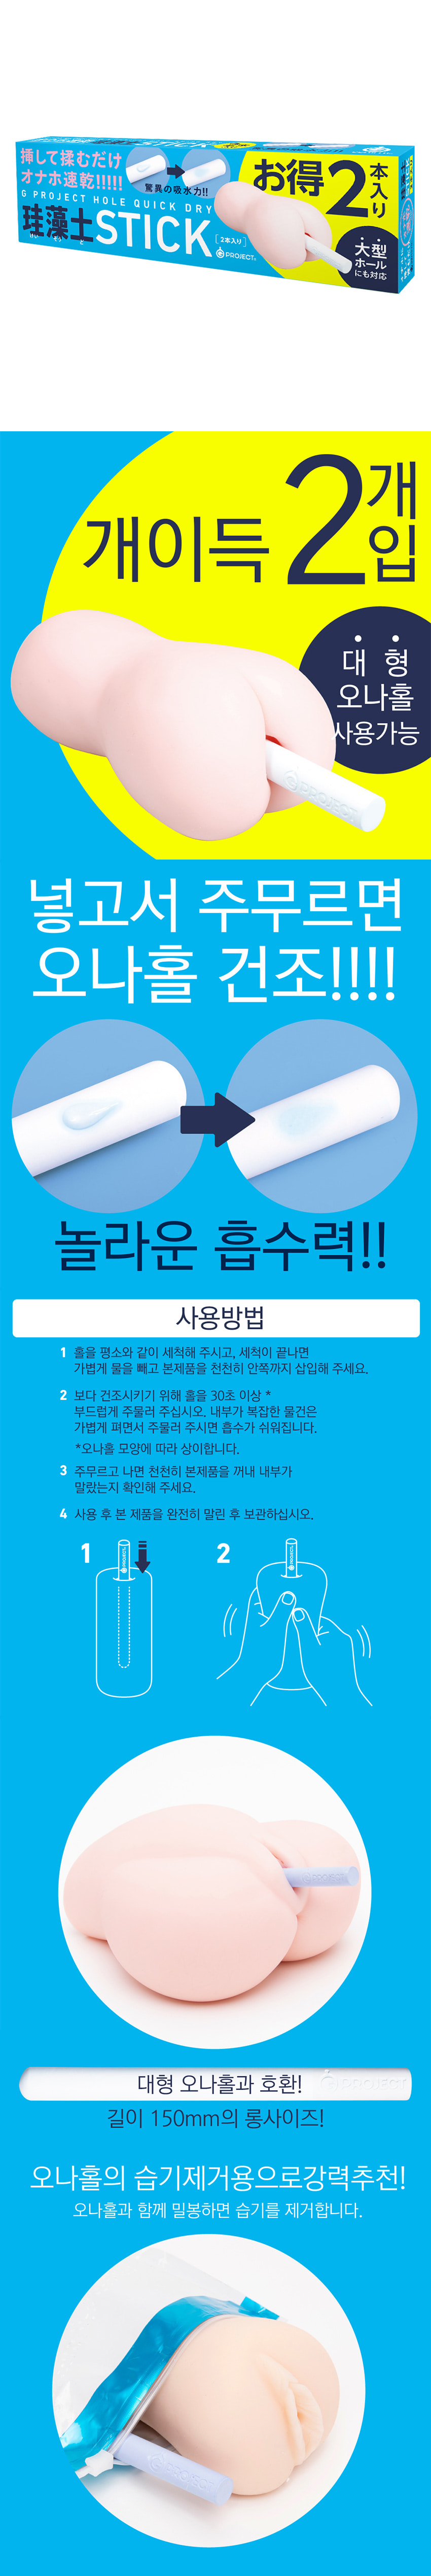 G PROJECT 오나홀 퀵 드라이 규조토 스틱 2개입